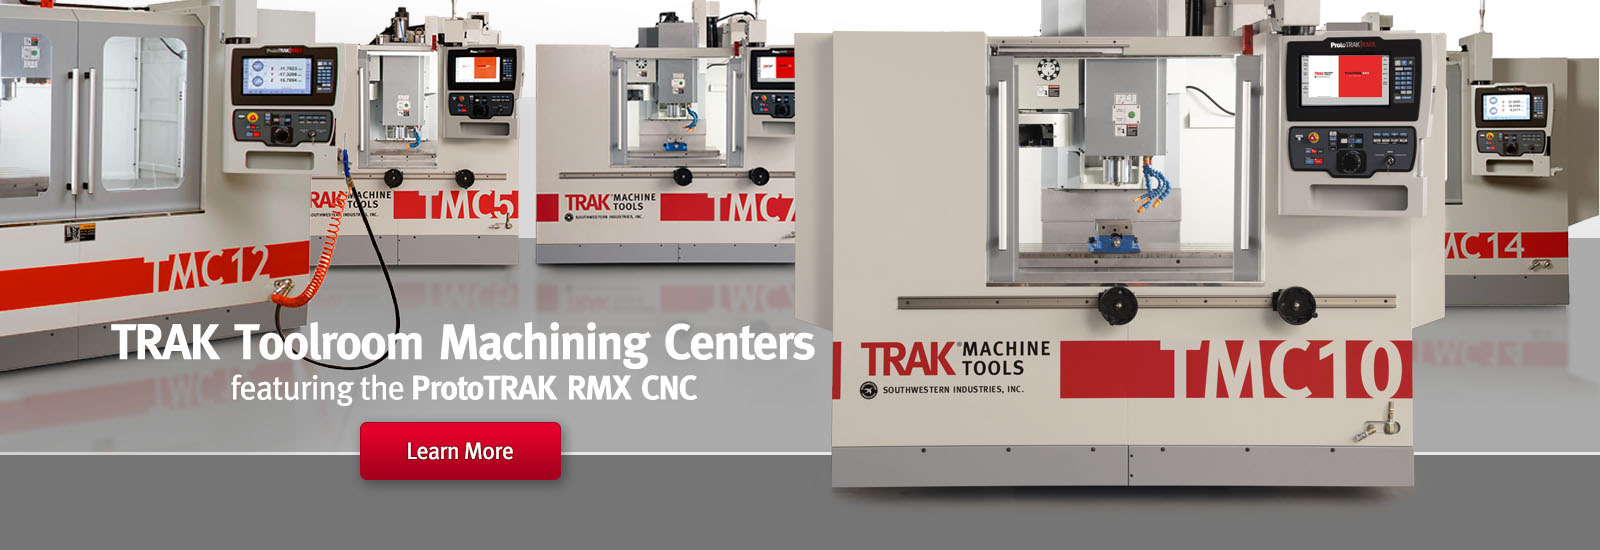 TRAK Toolroom Machining Centers